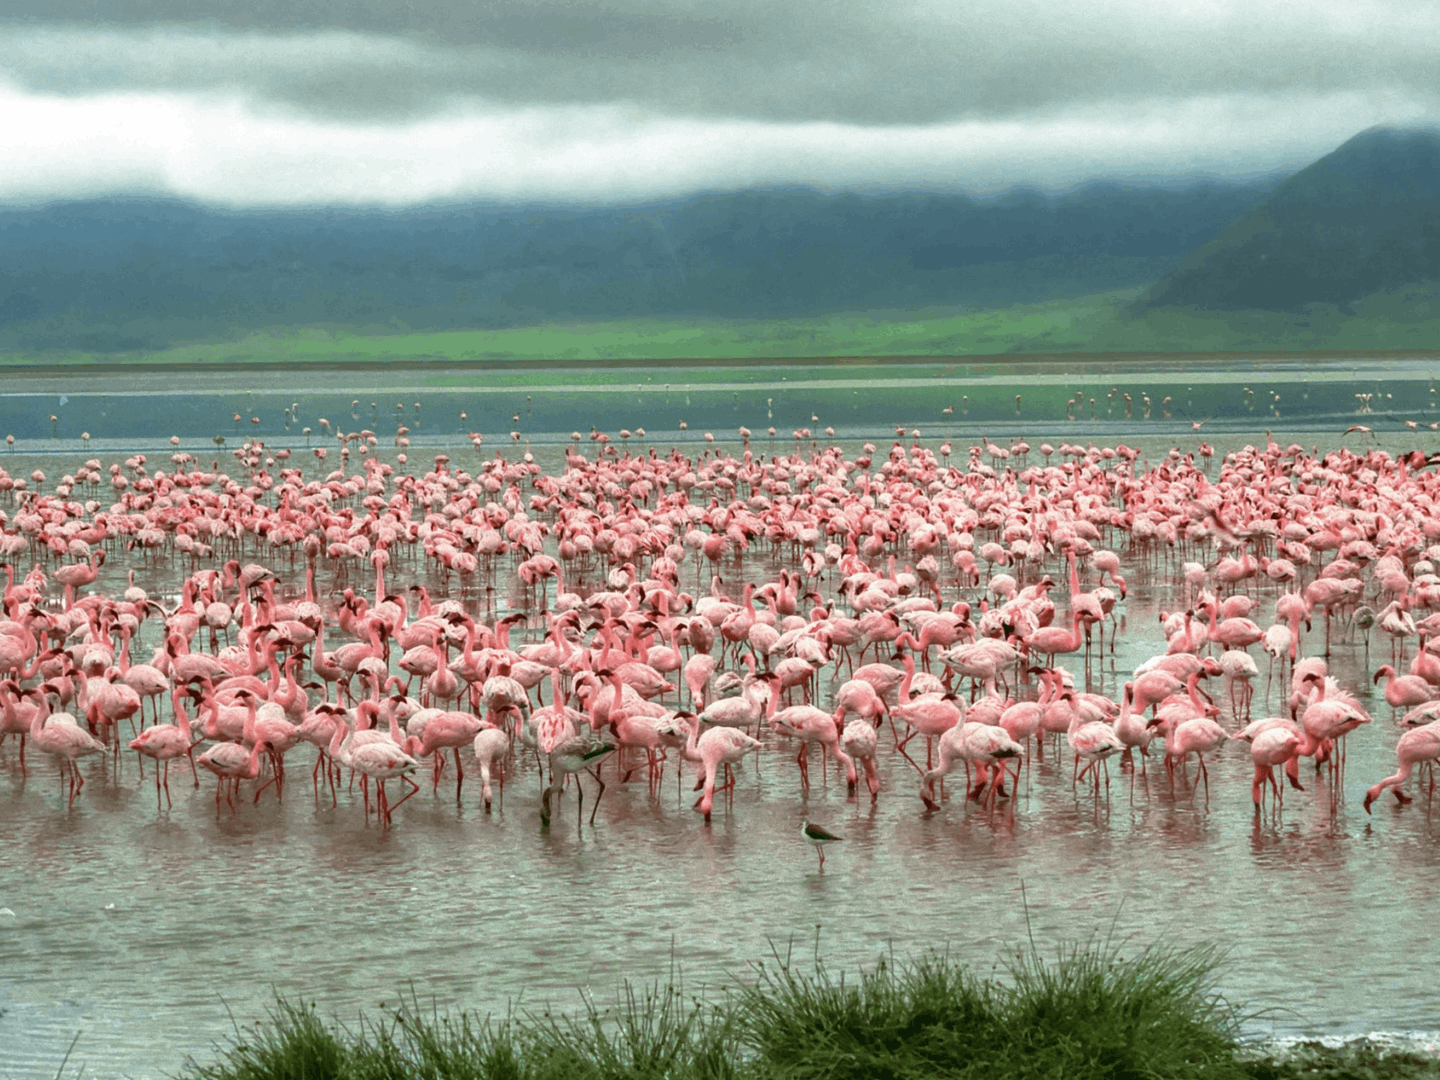 Il Lago Manyara e i suoi fenicotteri rosa